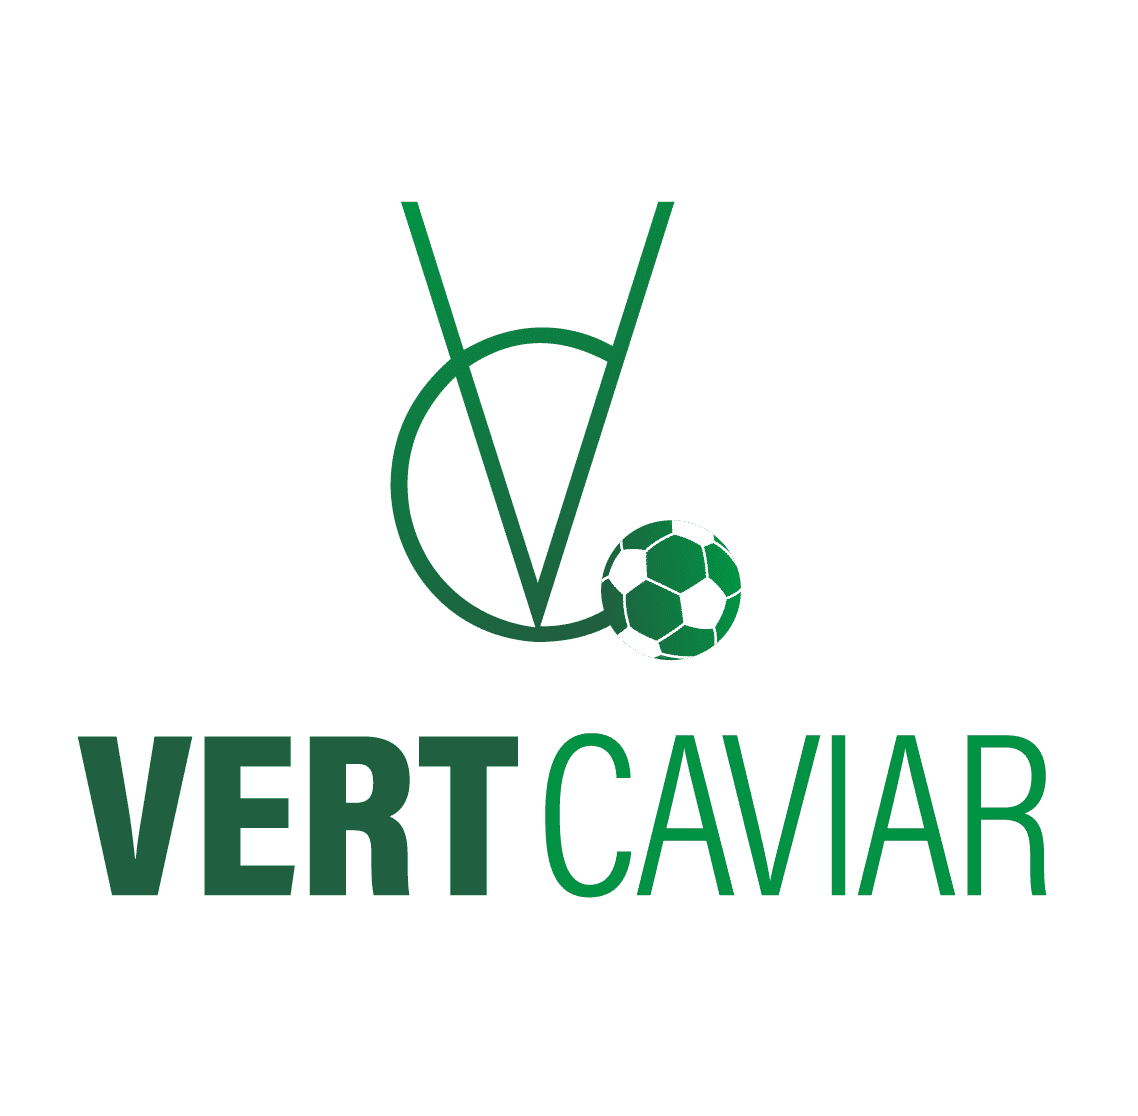 vertcaviar